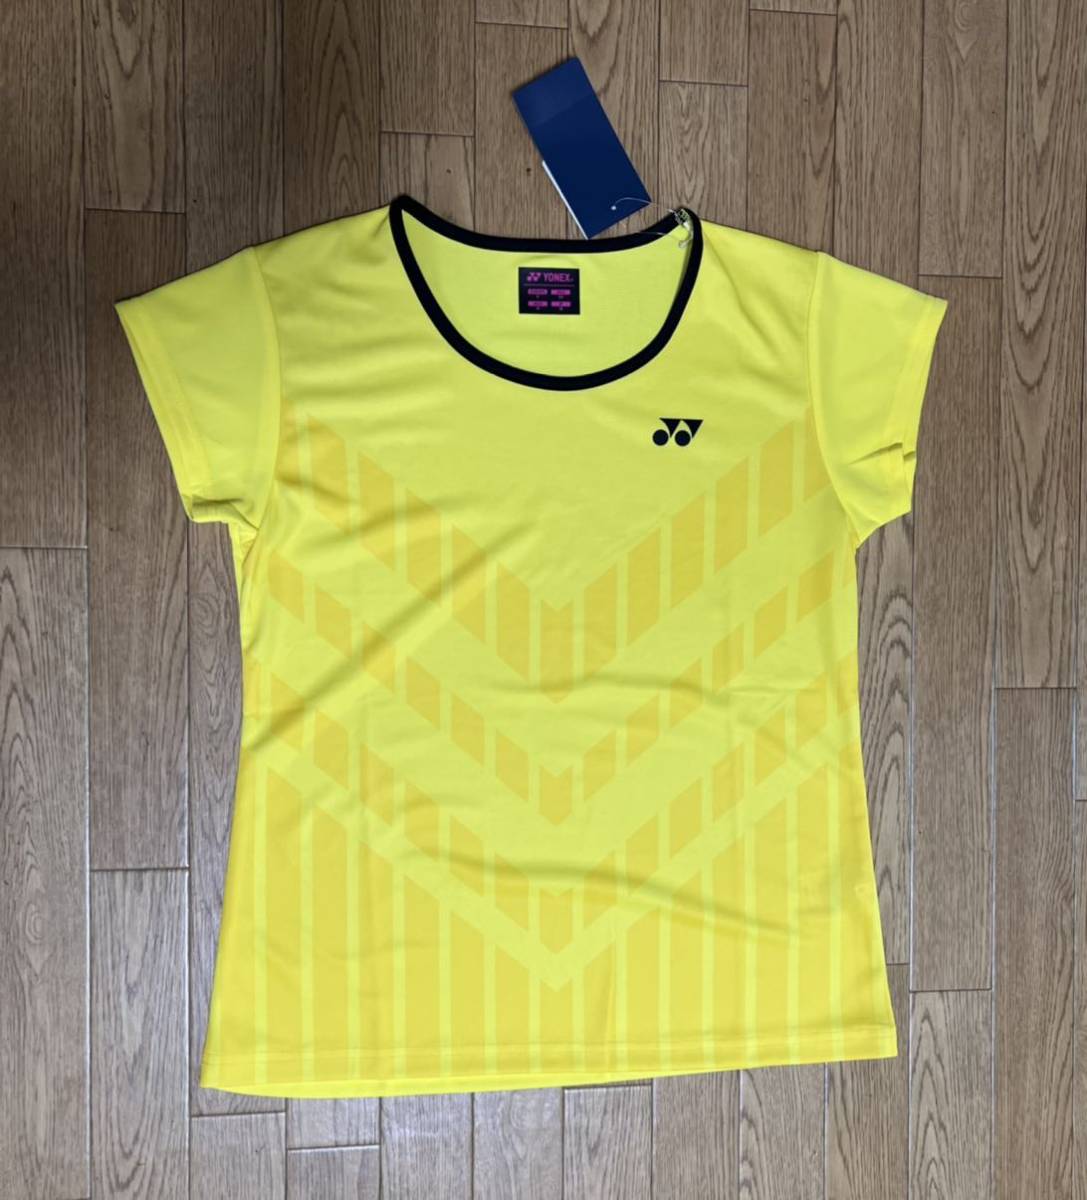 [ price cut ]YONEX Yonex wi men's dry T-shirt for women yellow yellow M badminton wear tennis wear 16516. sweat speed .